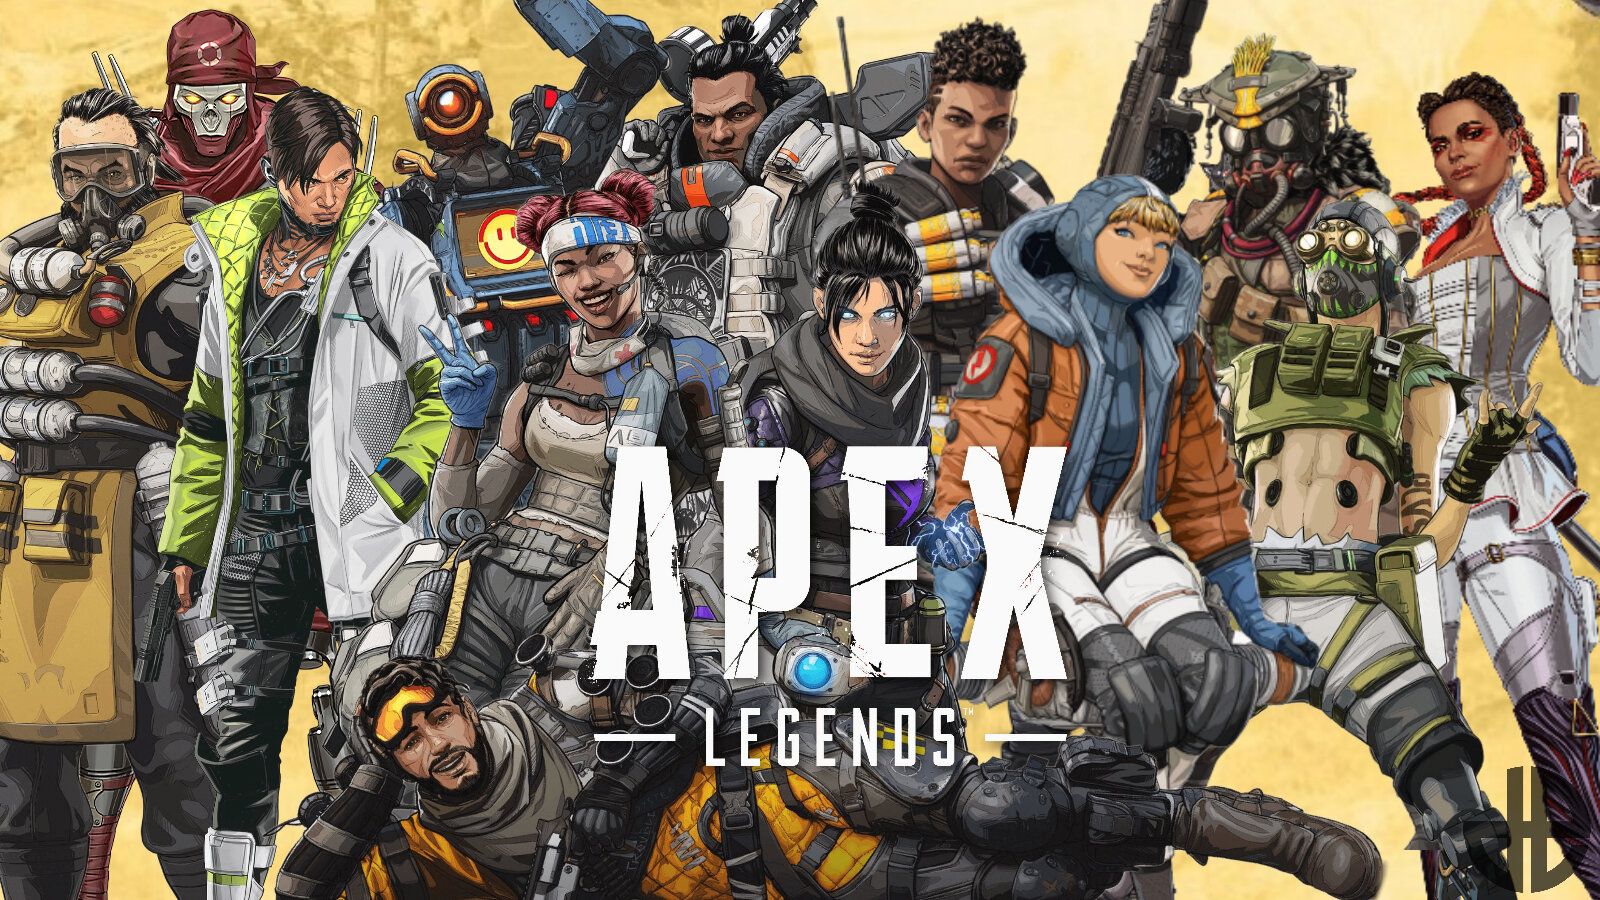 apex legends season 9 timer countdown